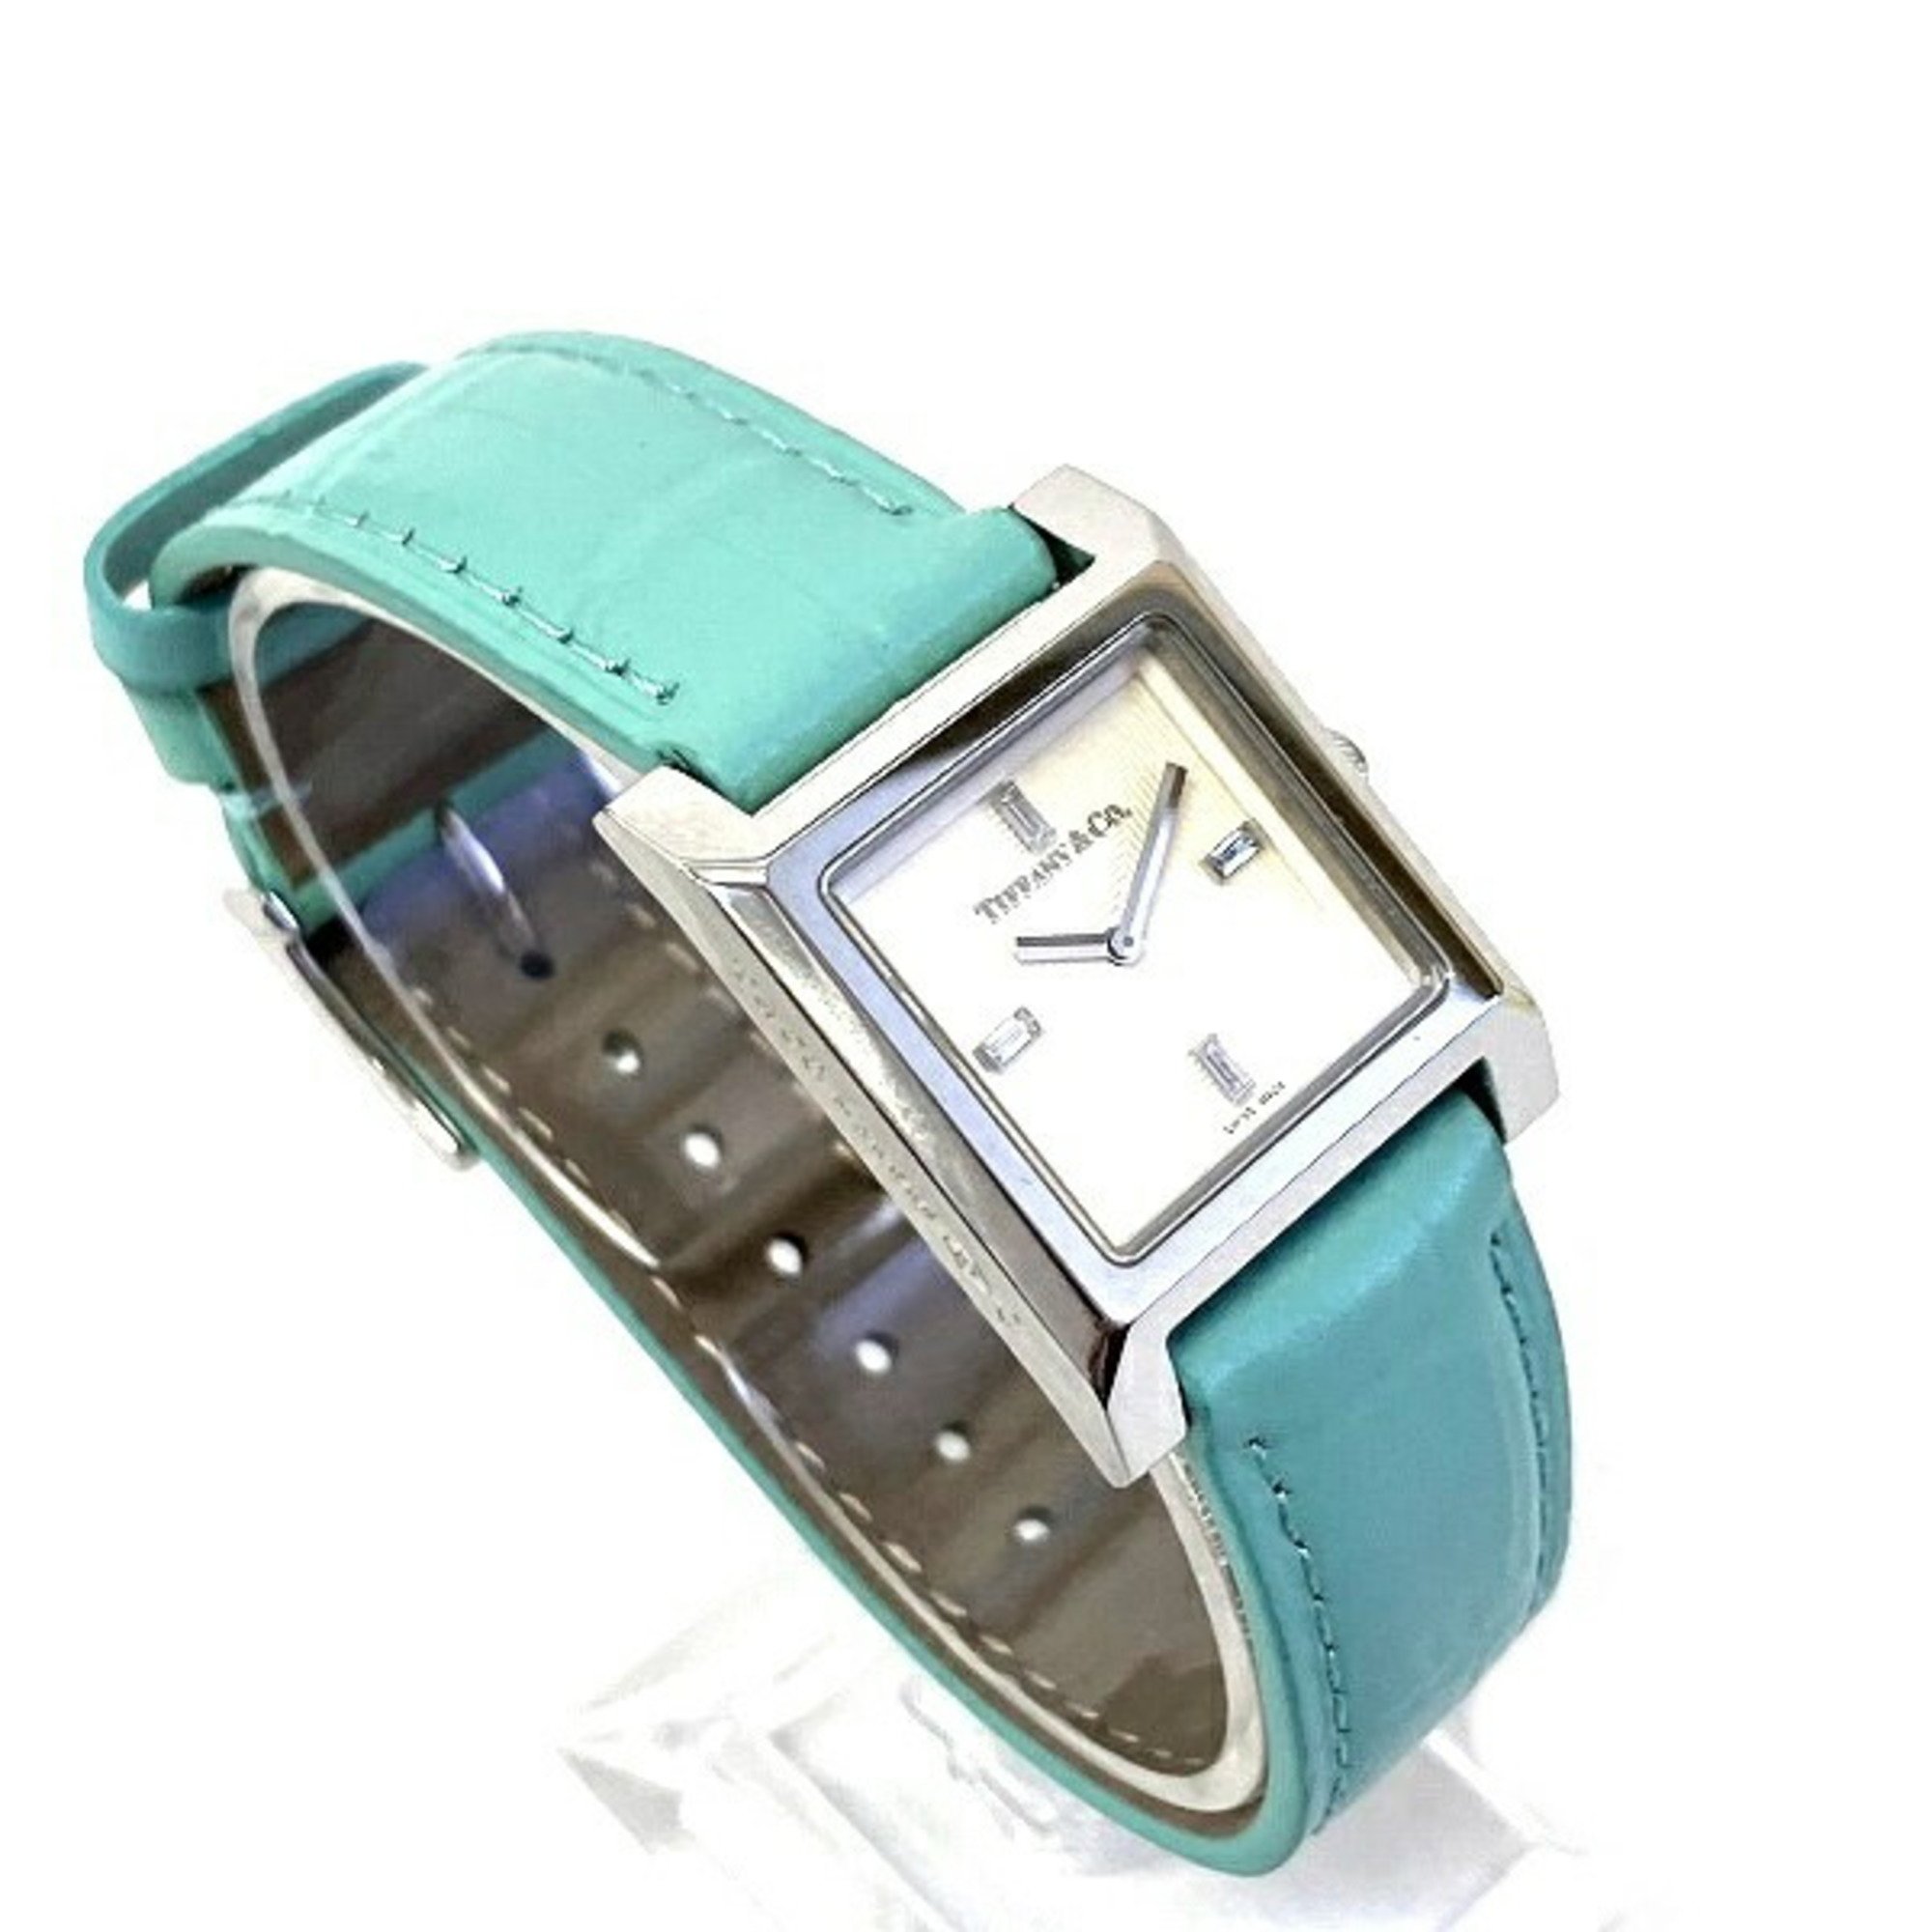 Tiffany Makers 1837 67460375 Quartz Watch Women's